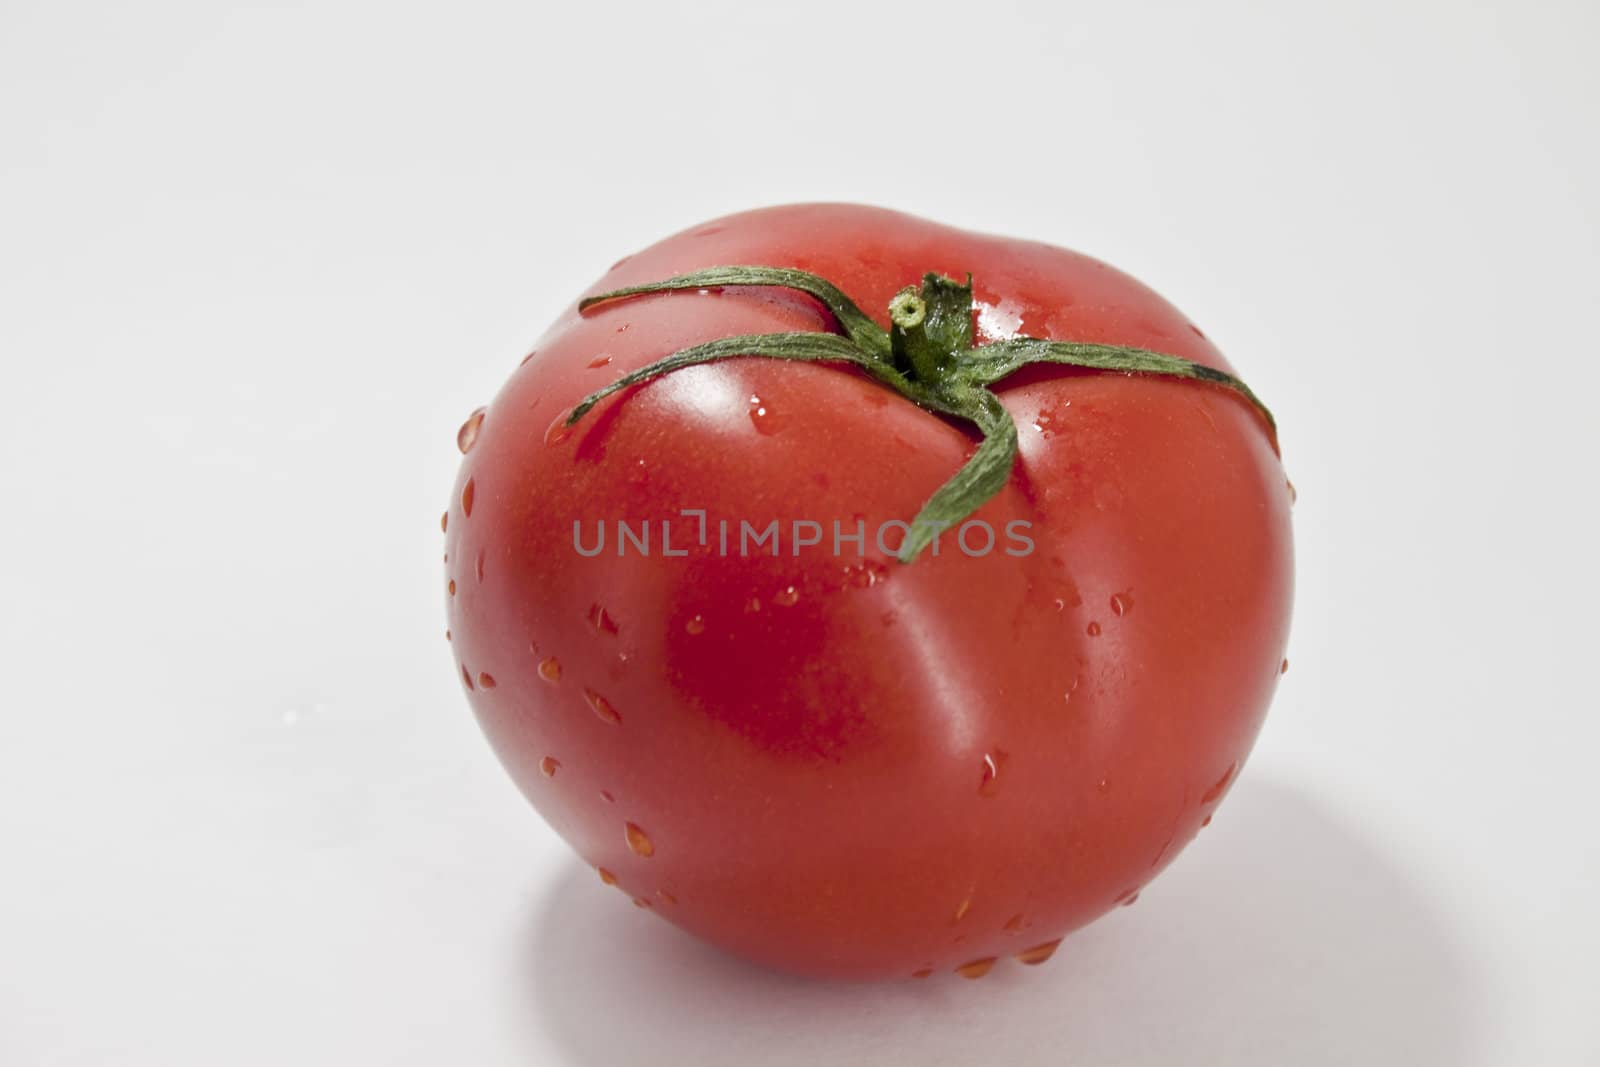 ripe tomatoes, fresh red by aziatik13